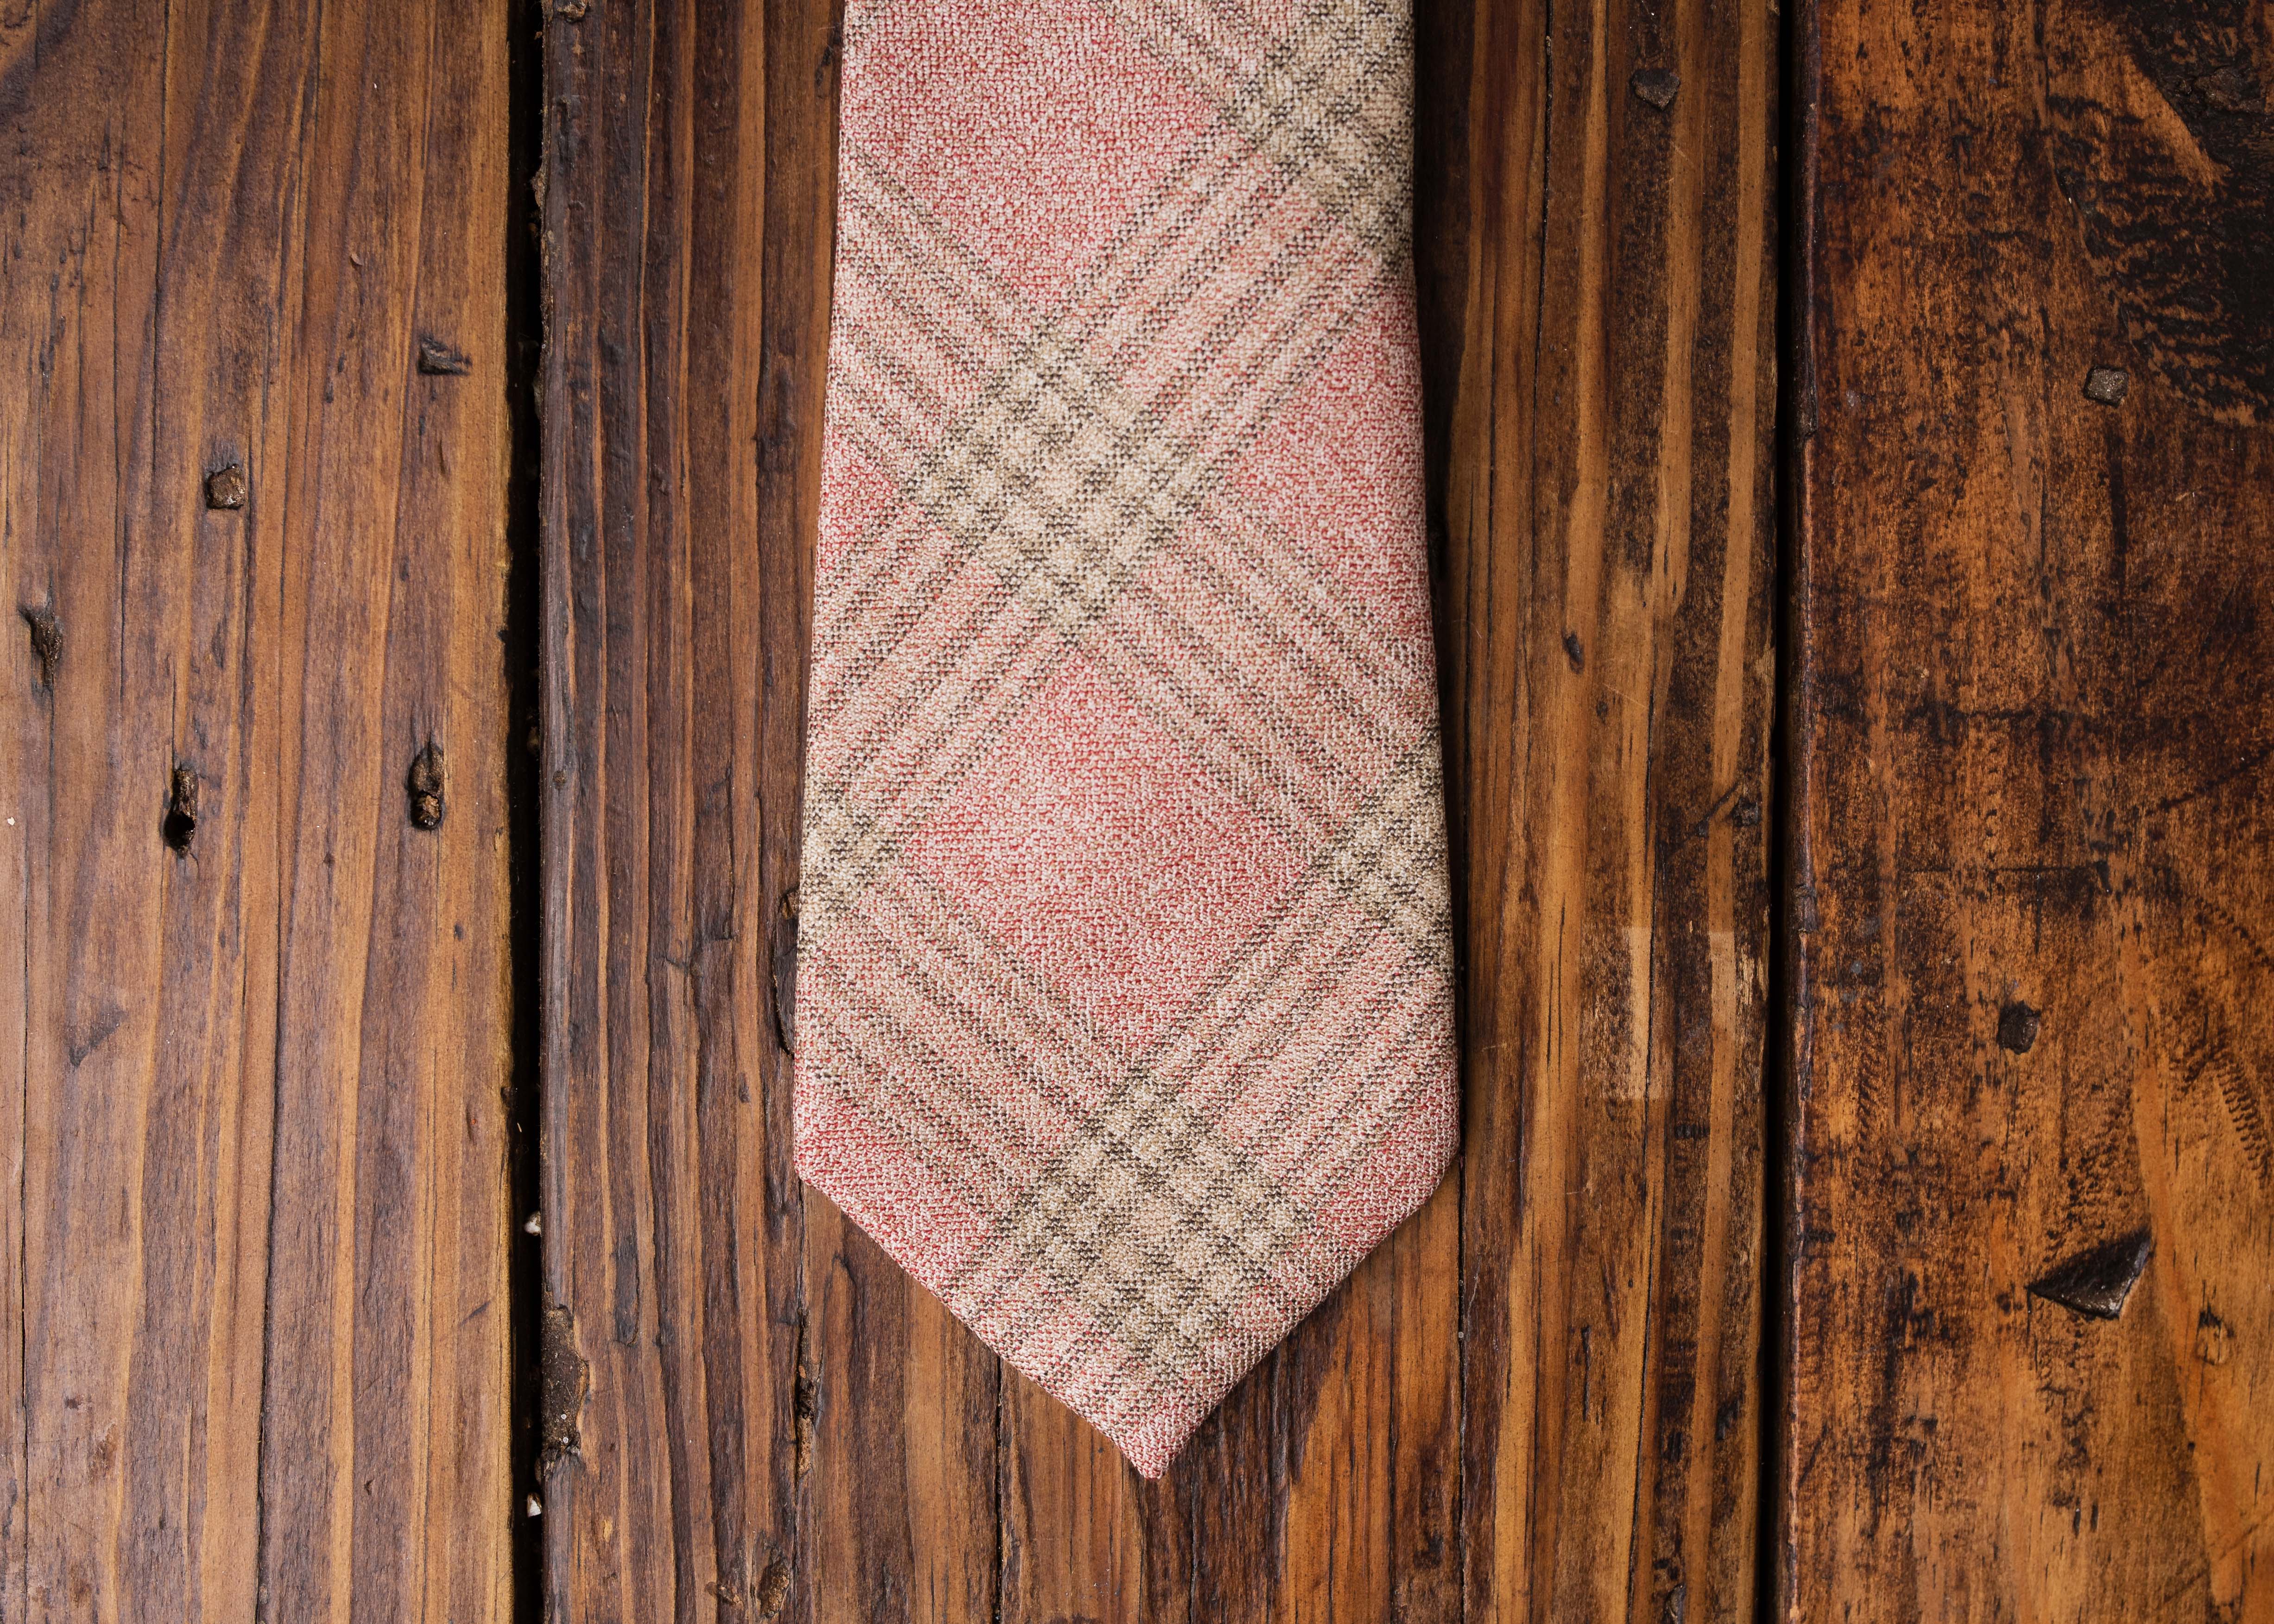 Salmon Check Necktie